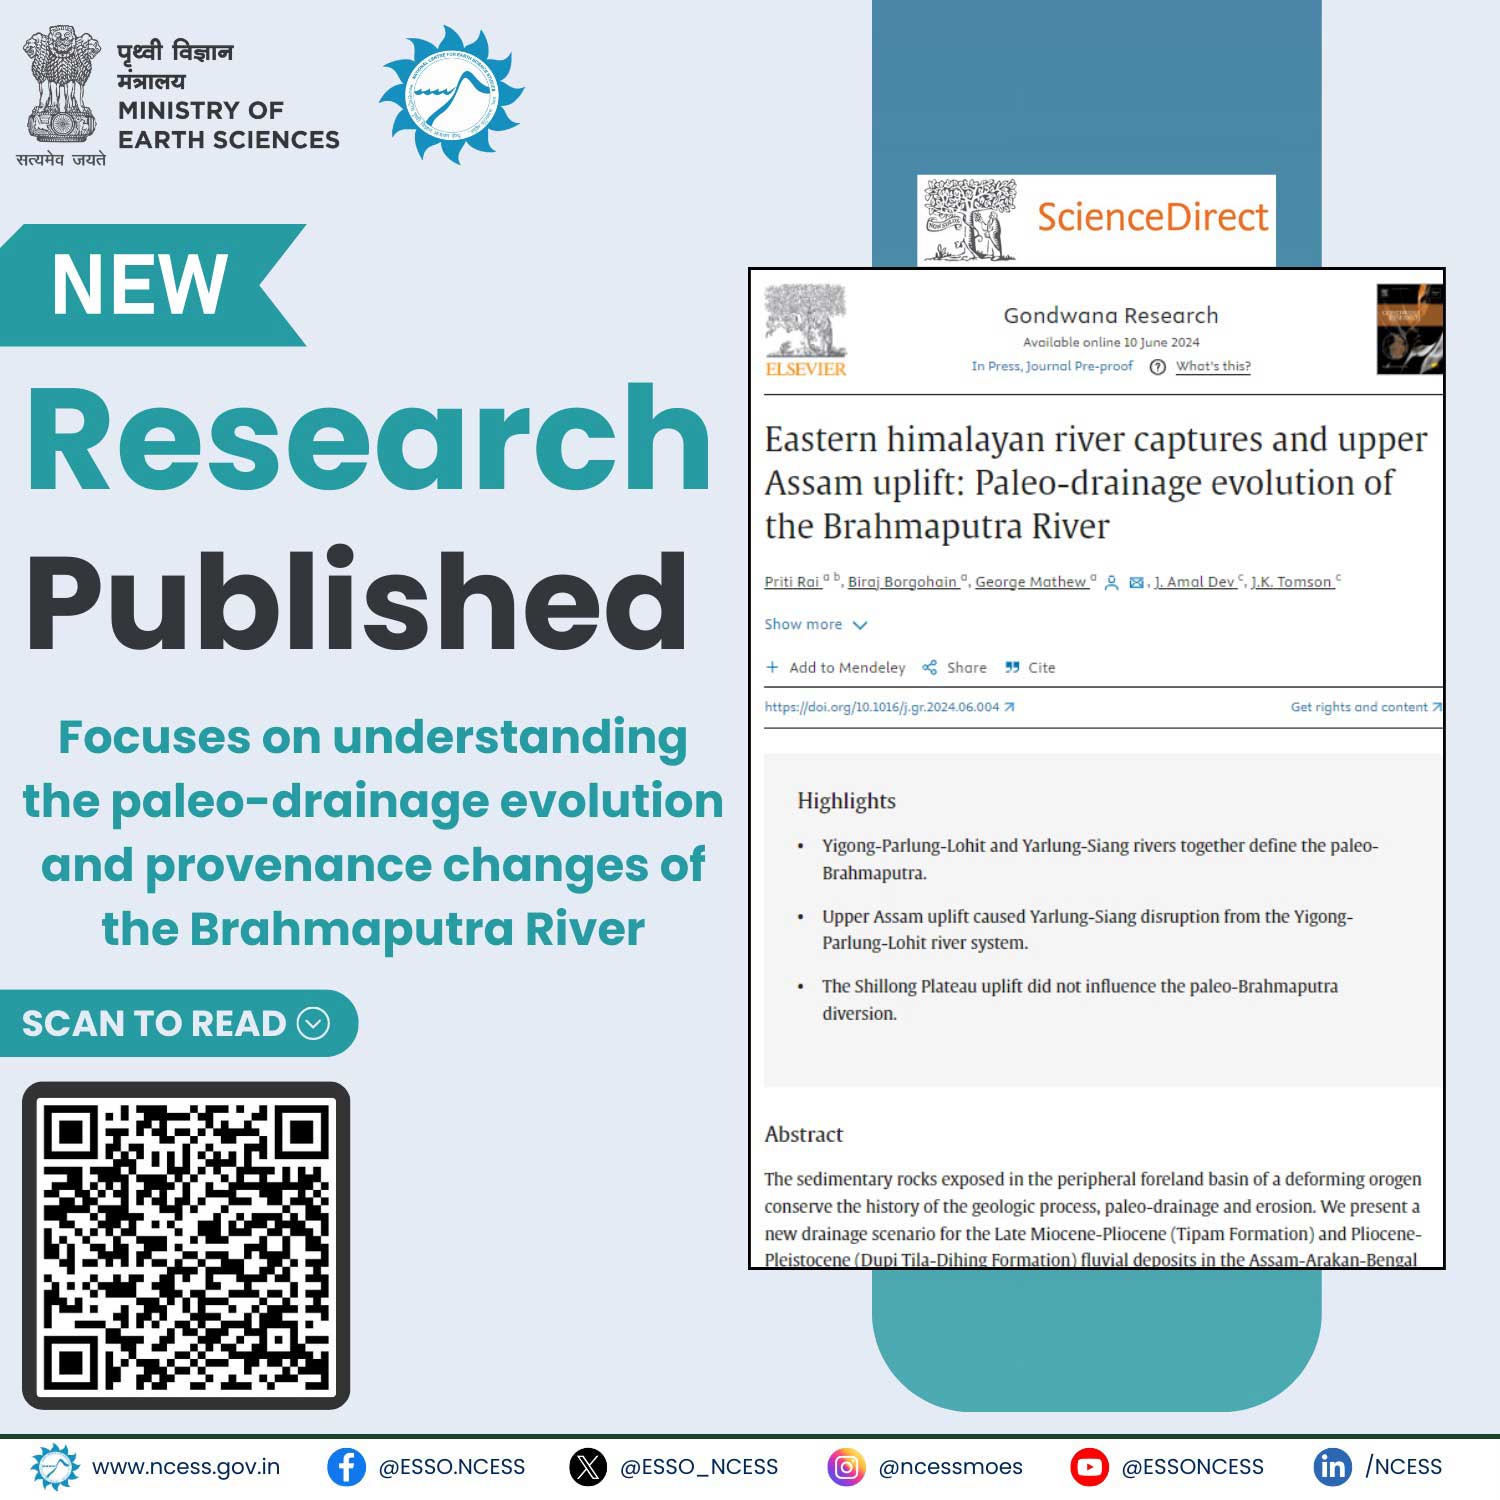 Paleo-drainage evolution of the Brahmaputra River